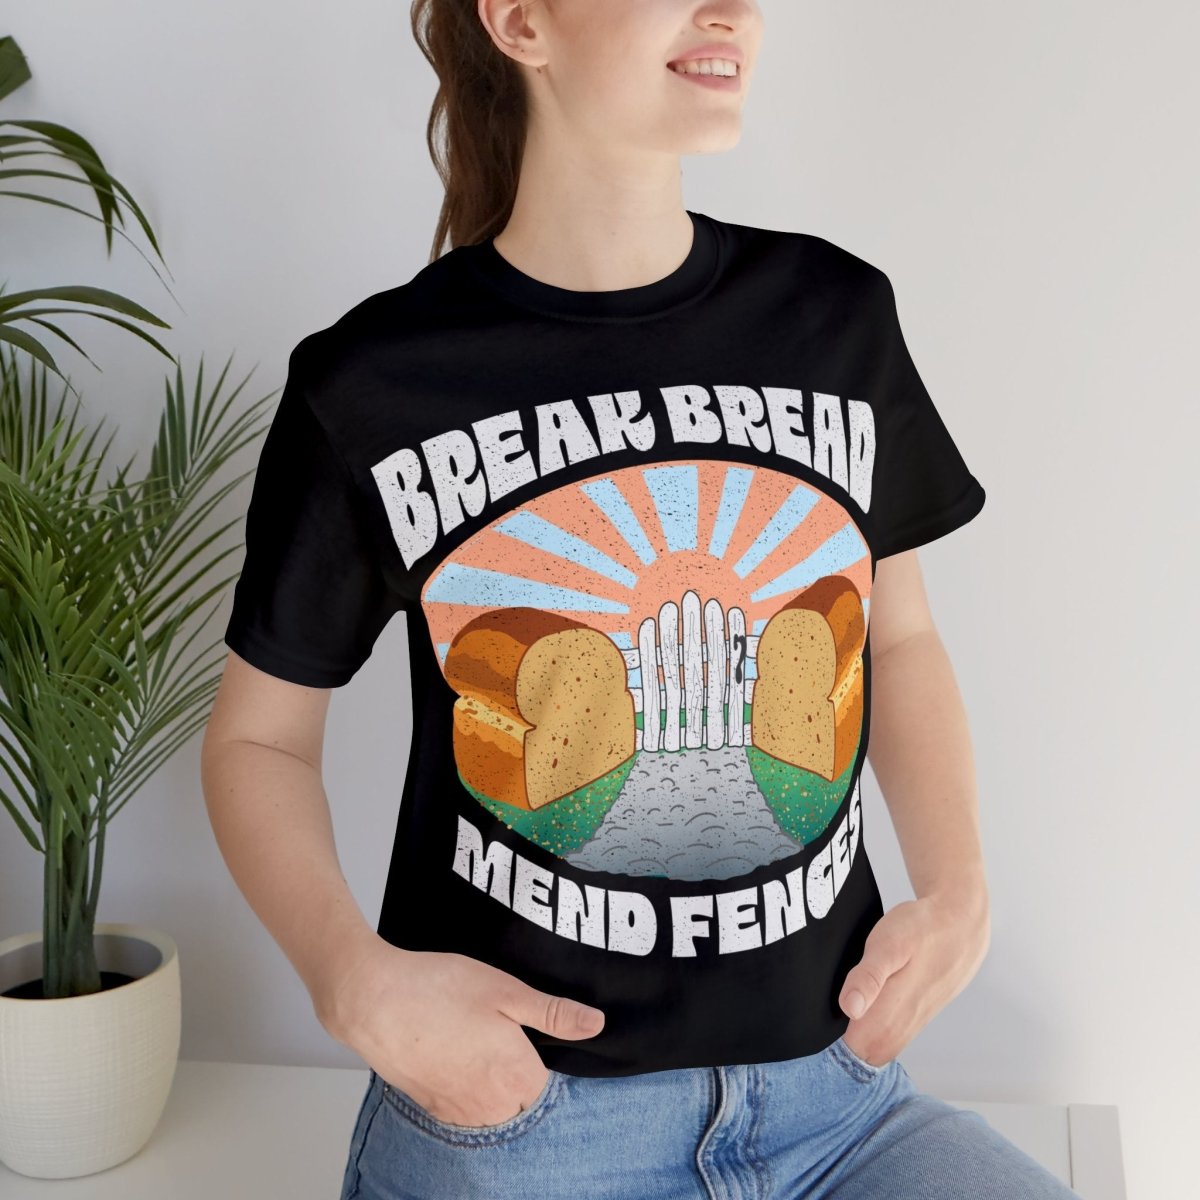 Break Bread Mend Fences Premium T-Shirt, Cook, Chef, Bake, Peacemaker